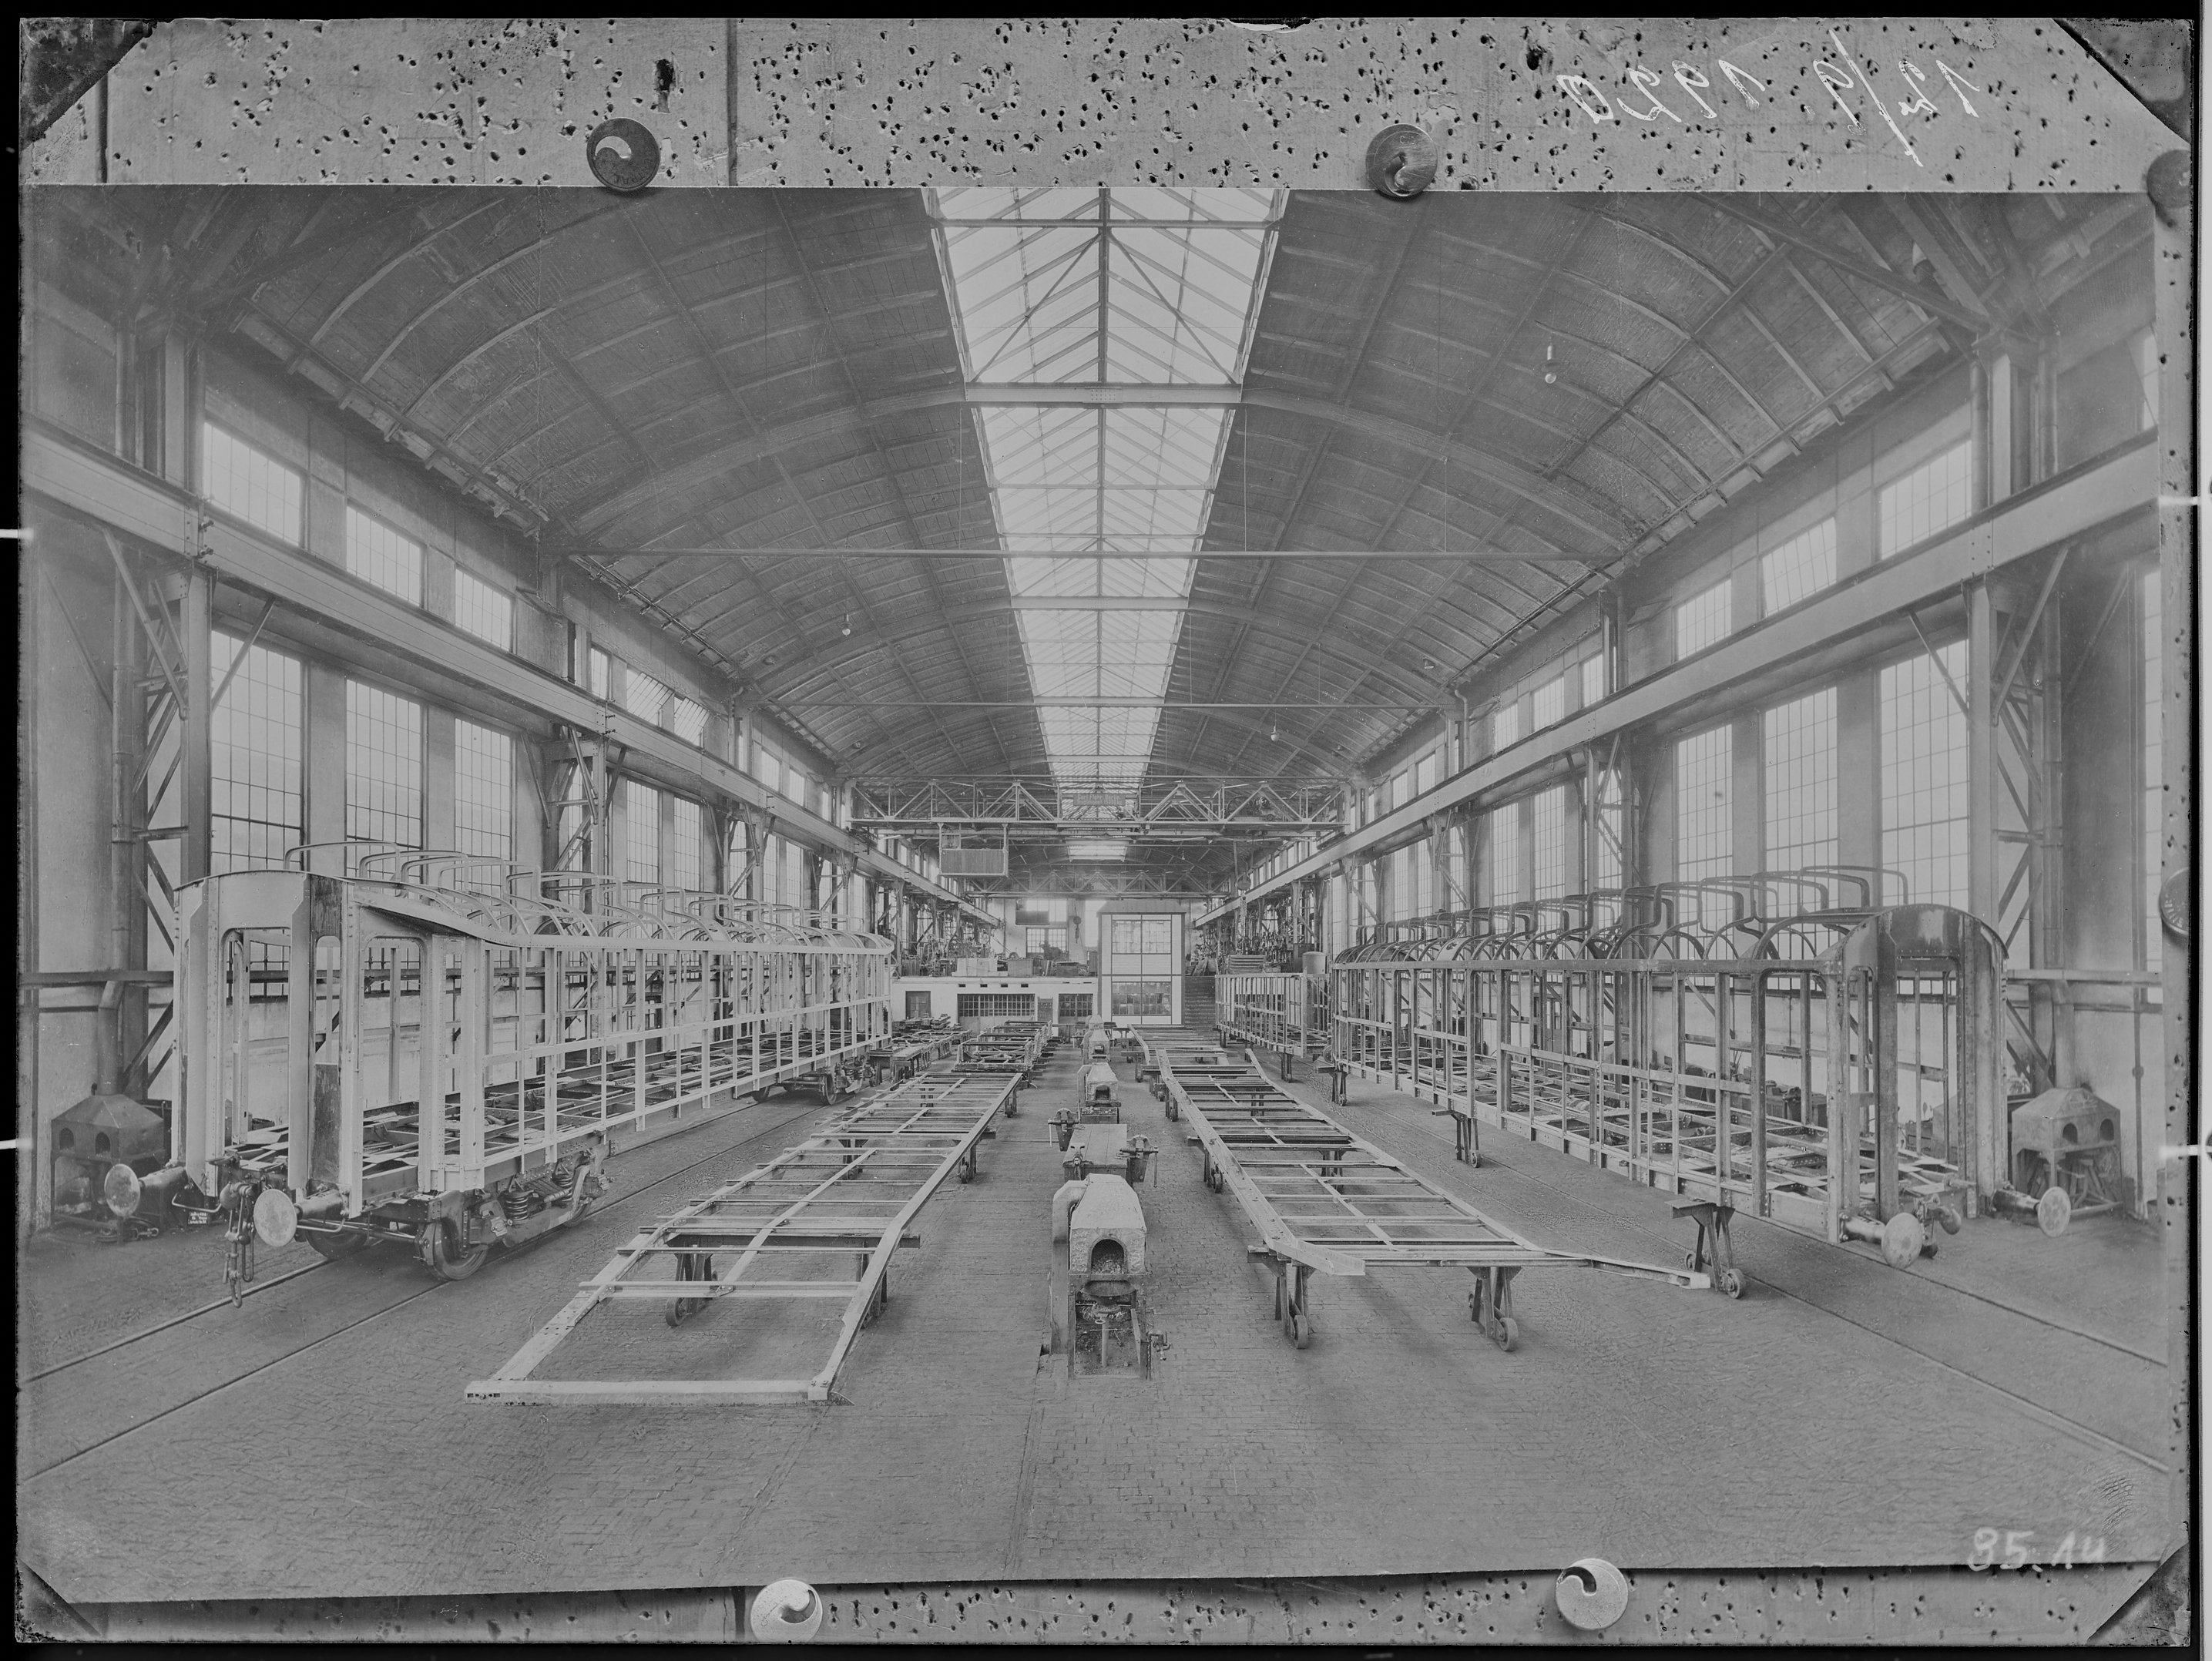 Fotografie: Waggonfabrik Görlitz Aktiengesellschaft, Werkhalle (Innenansicht), Gestellbau, 1920. (Verkehrsmuseum Dresden CC BY-NC-SA)